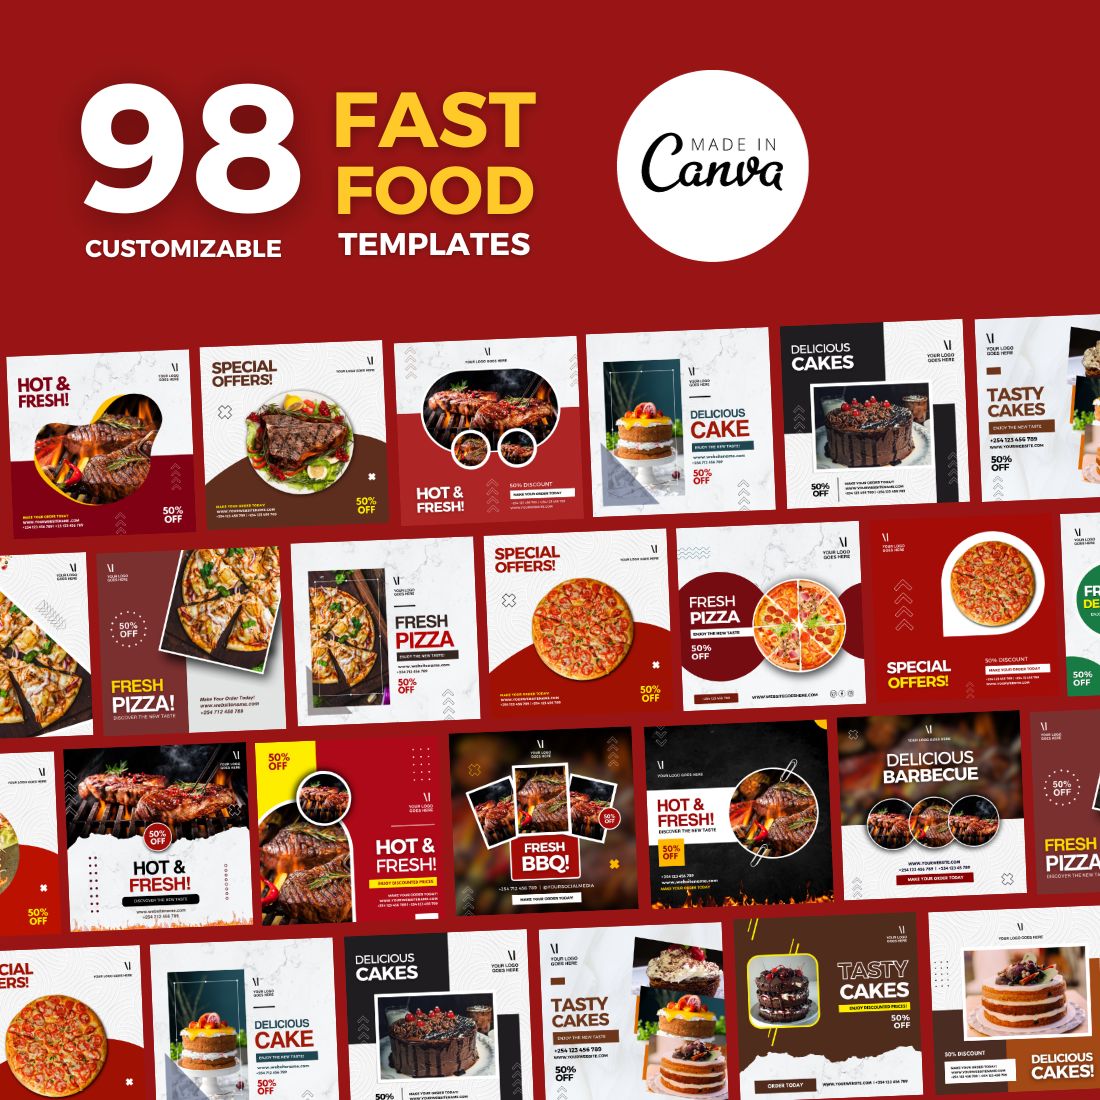 98 Fast Food Templates Design Bundle preview image.